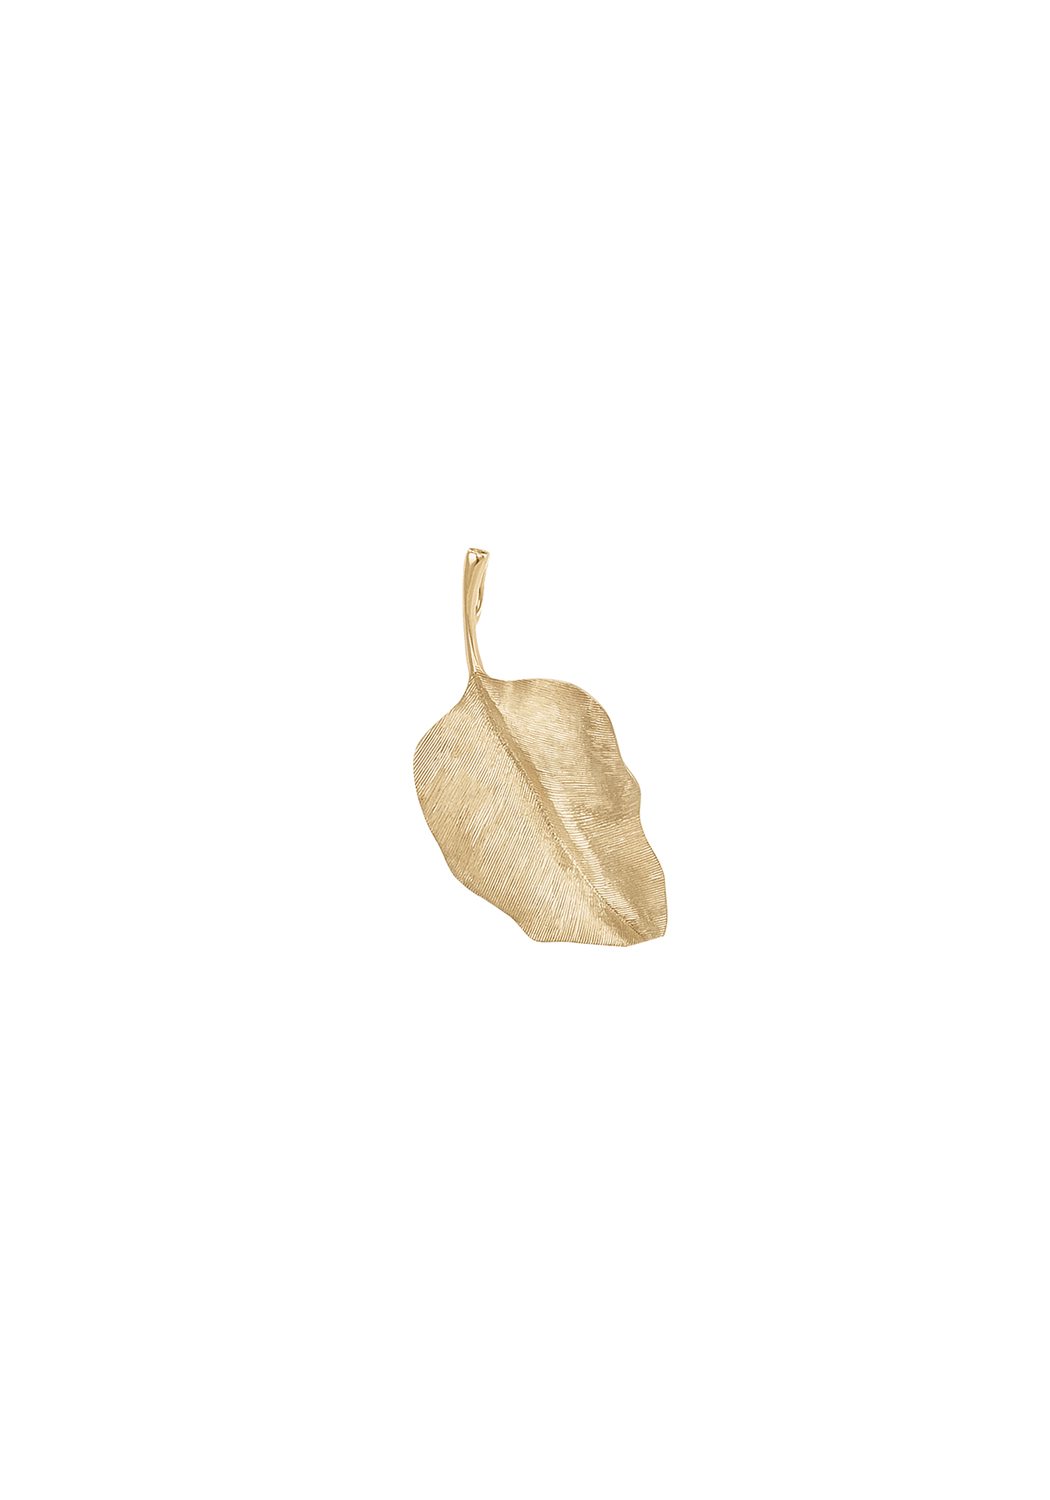 Ole Lynggaard Leaves 18K Yellow Gold Leaf Pendant | 4cm ef. A2617-402 | OsterJewelers.com